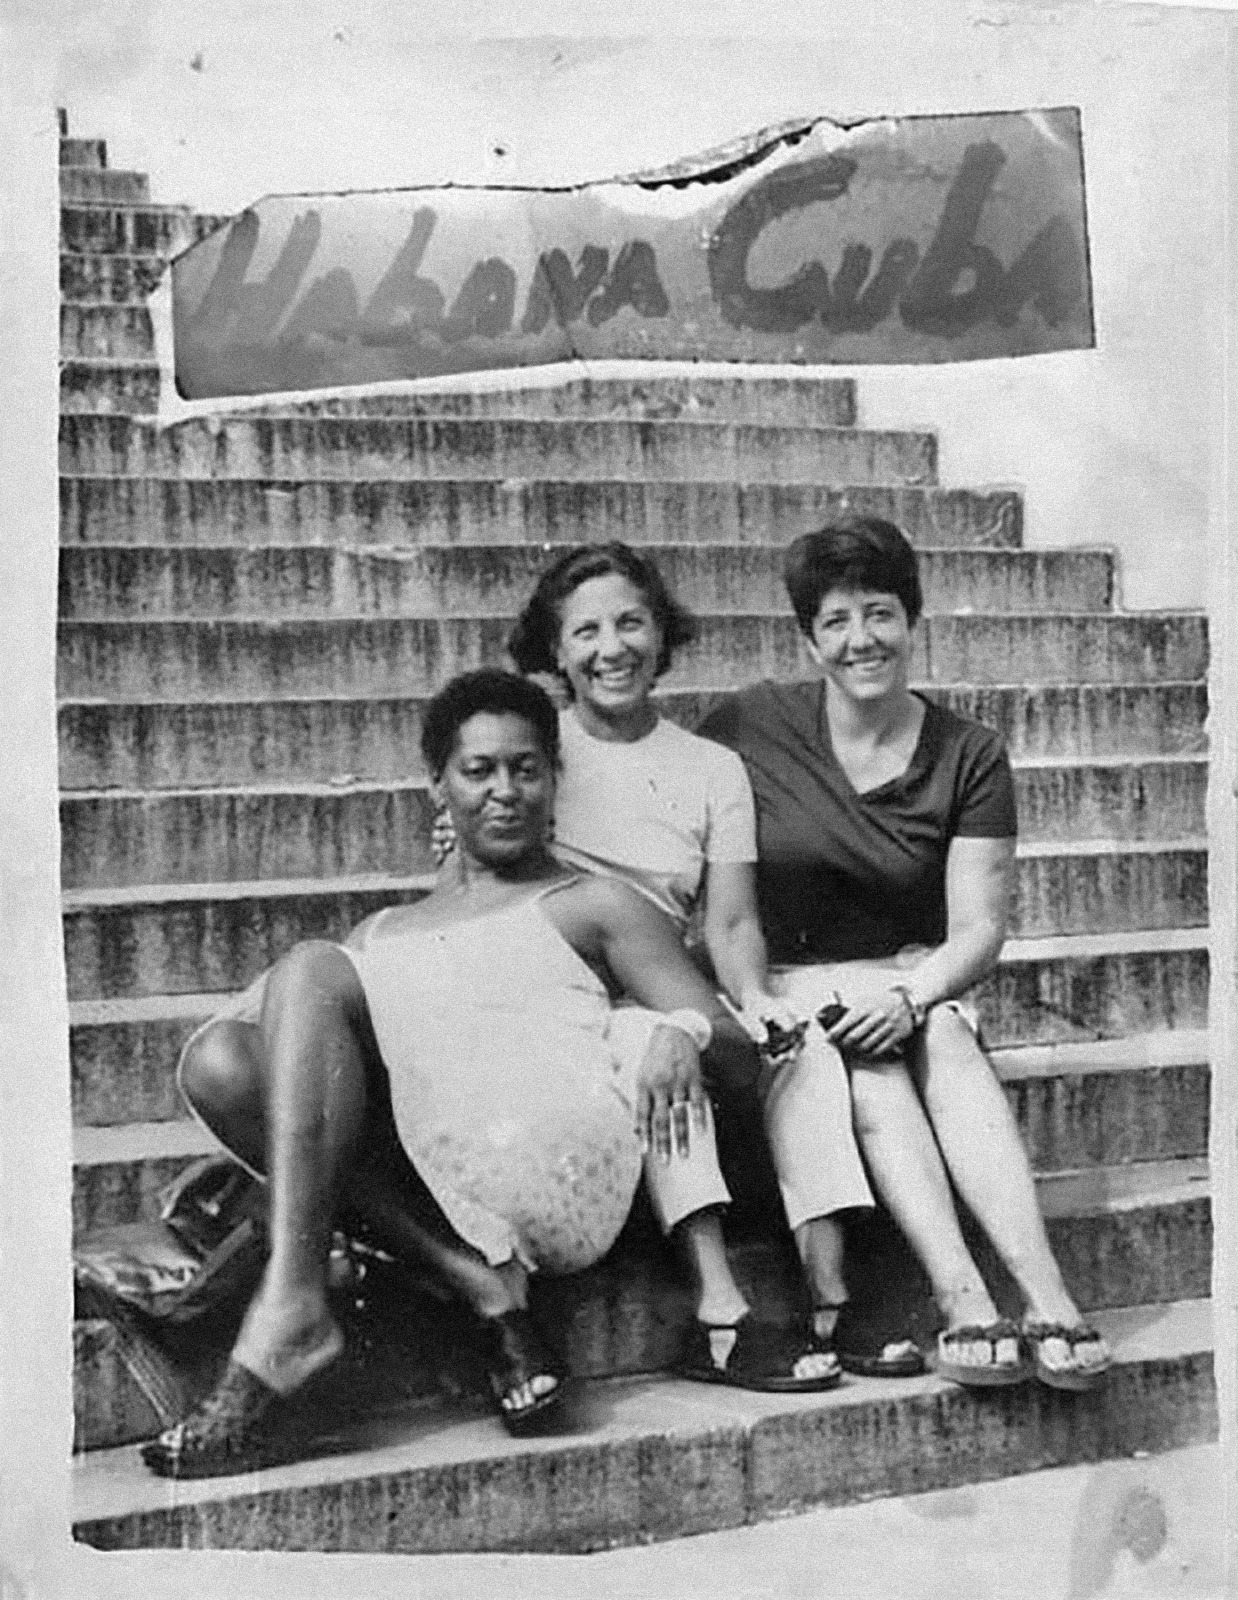 Carrie Mae Weems, Wendy Olsoff, Penny Pilkington, Havana, Cuba, 2000